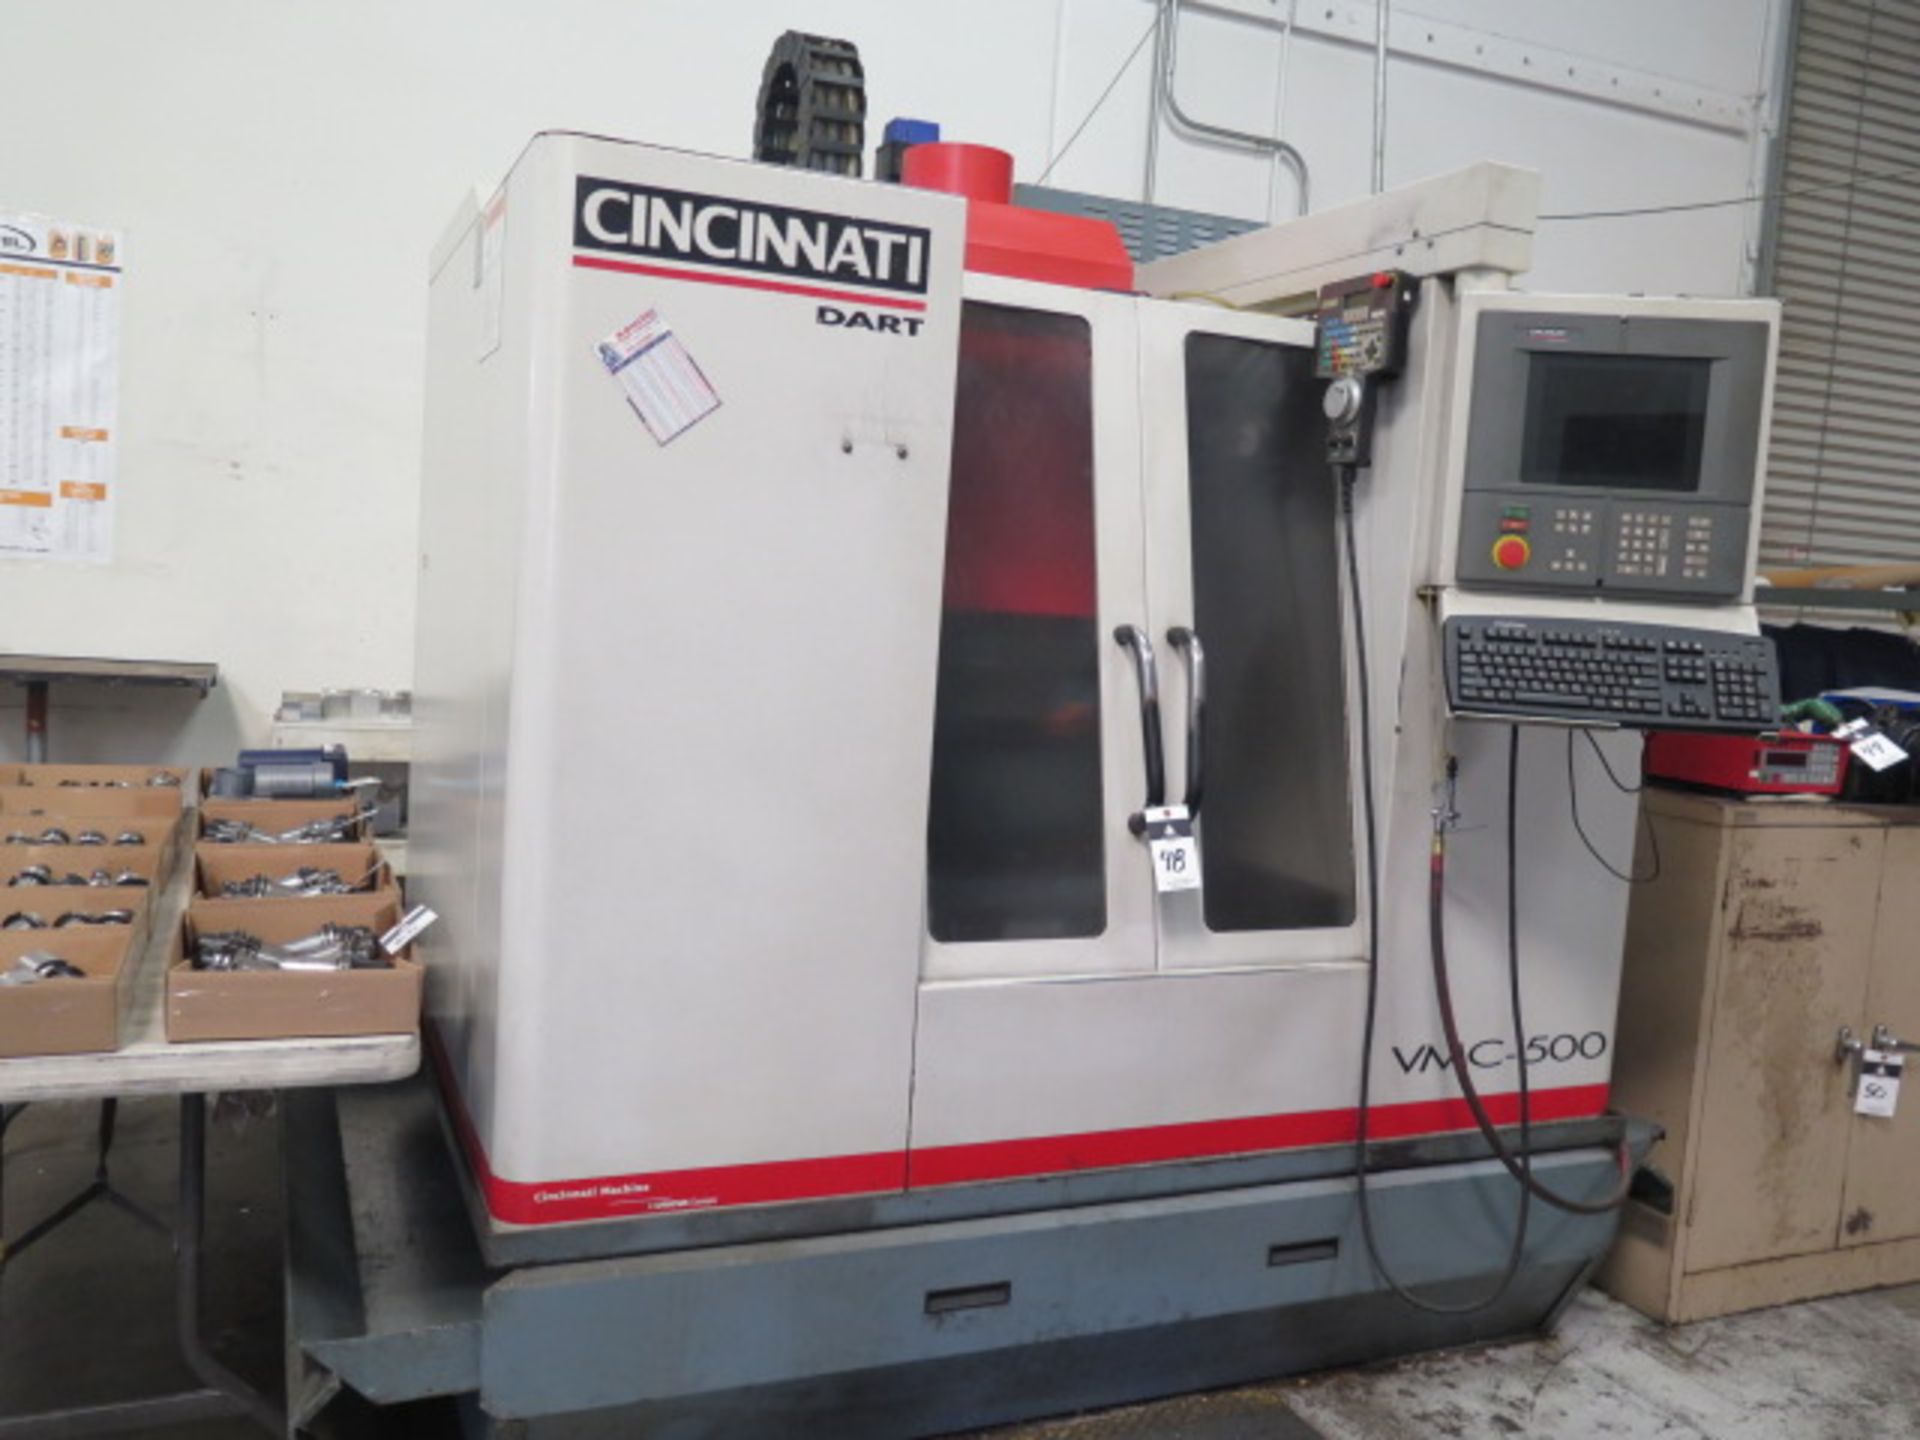 Cincinnati VMC-500 “Dart-500” CNC Vertical Machining Center s/n 7042-A00-KK2092 w/ Cincinnati